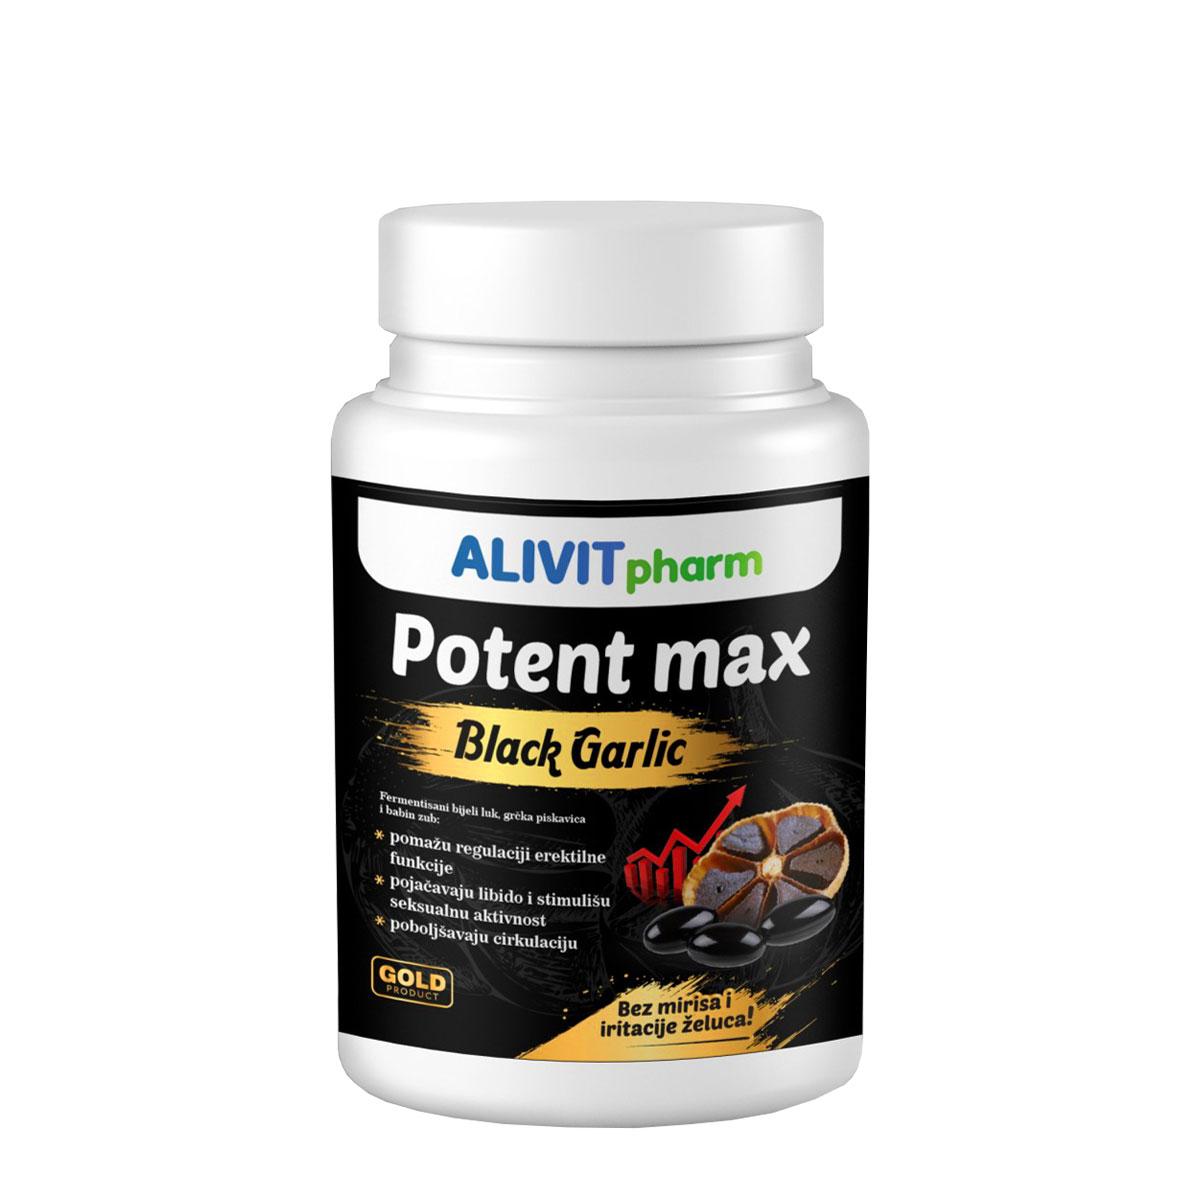 ALIVIT PHARM Black garlic Potent Max 90 kapsula